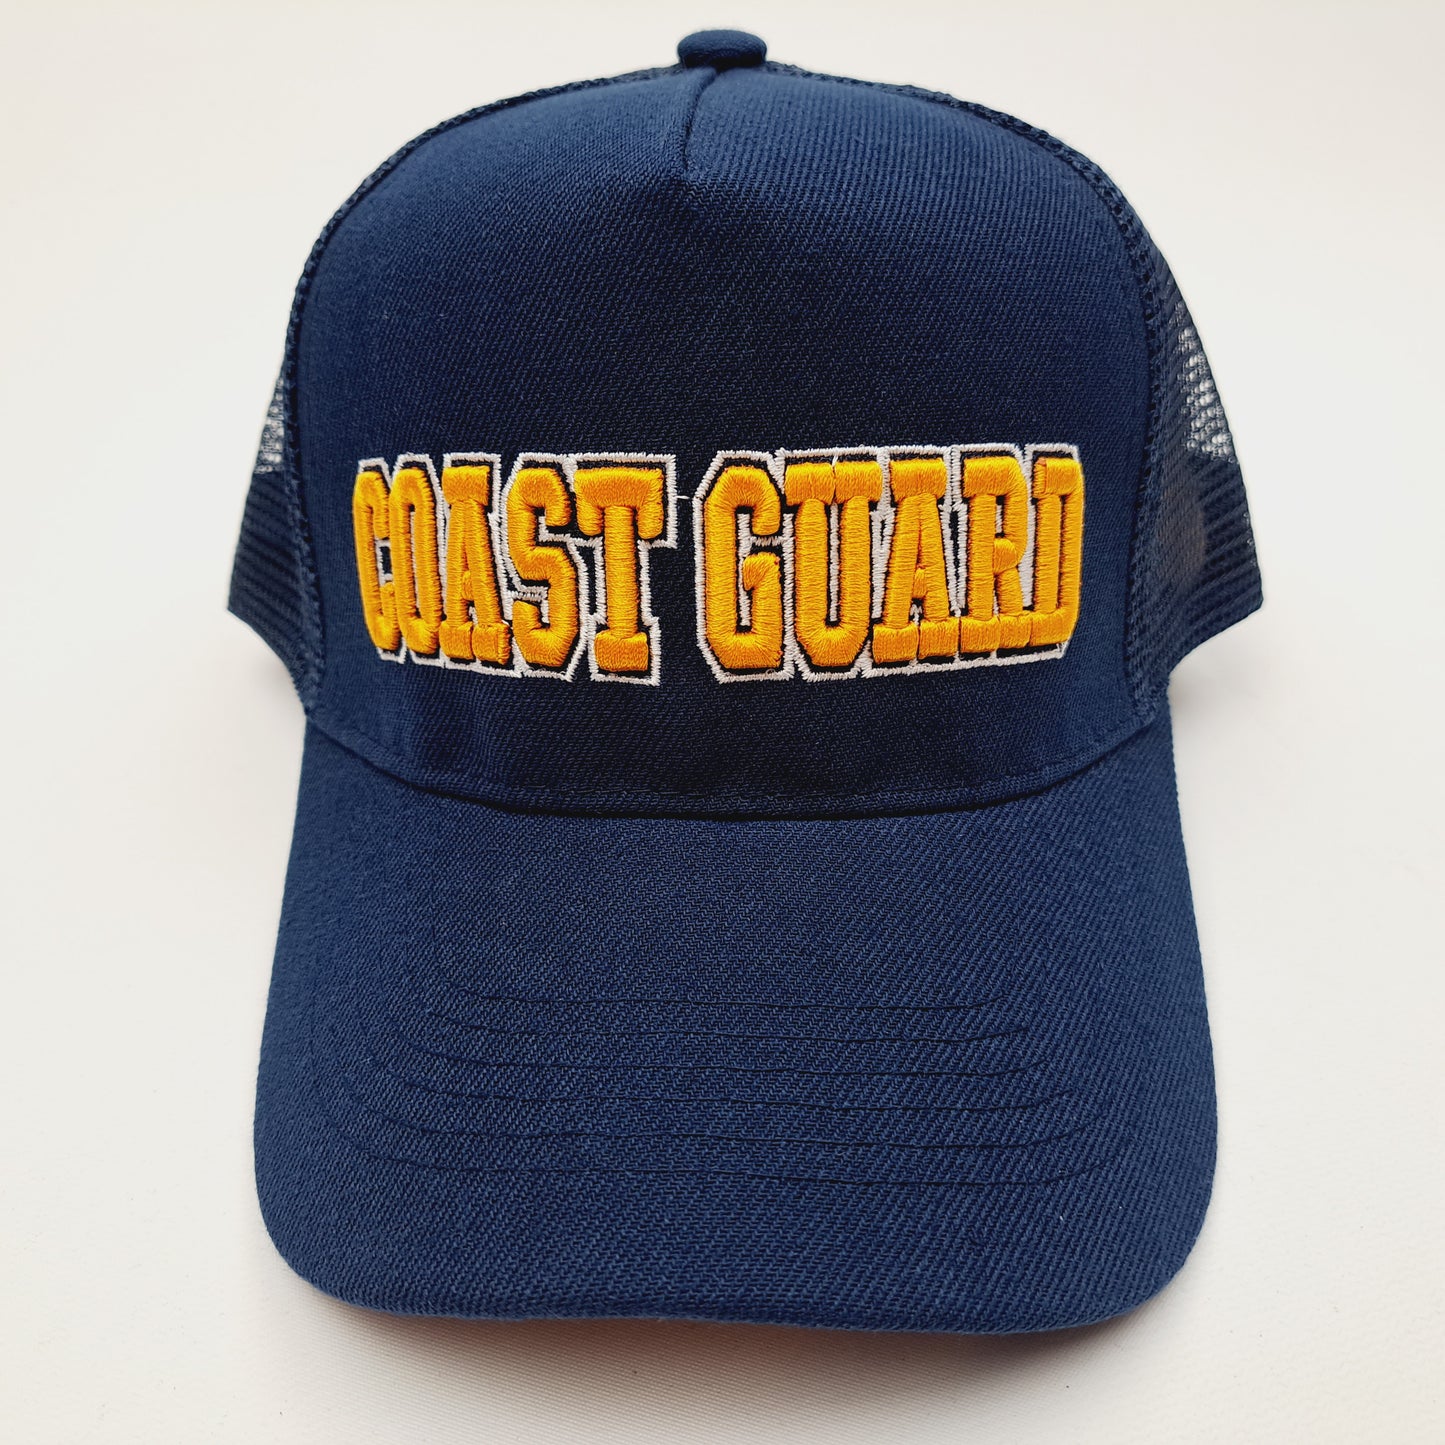 U.S. Coast Guard Men's Embroidered Mesh Snapback Cap Hat Navy Blue